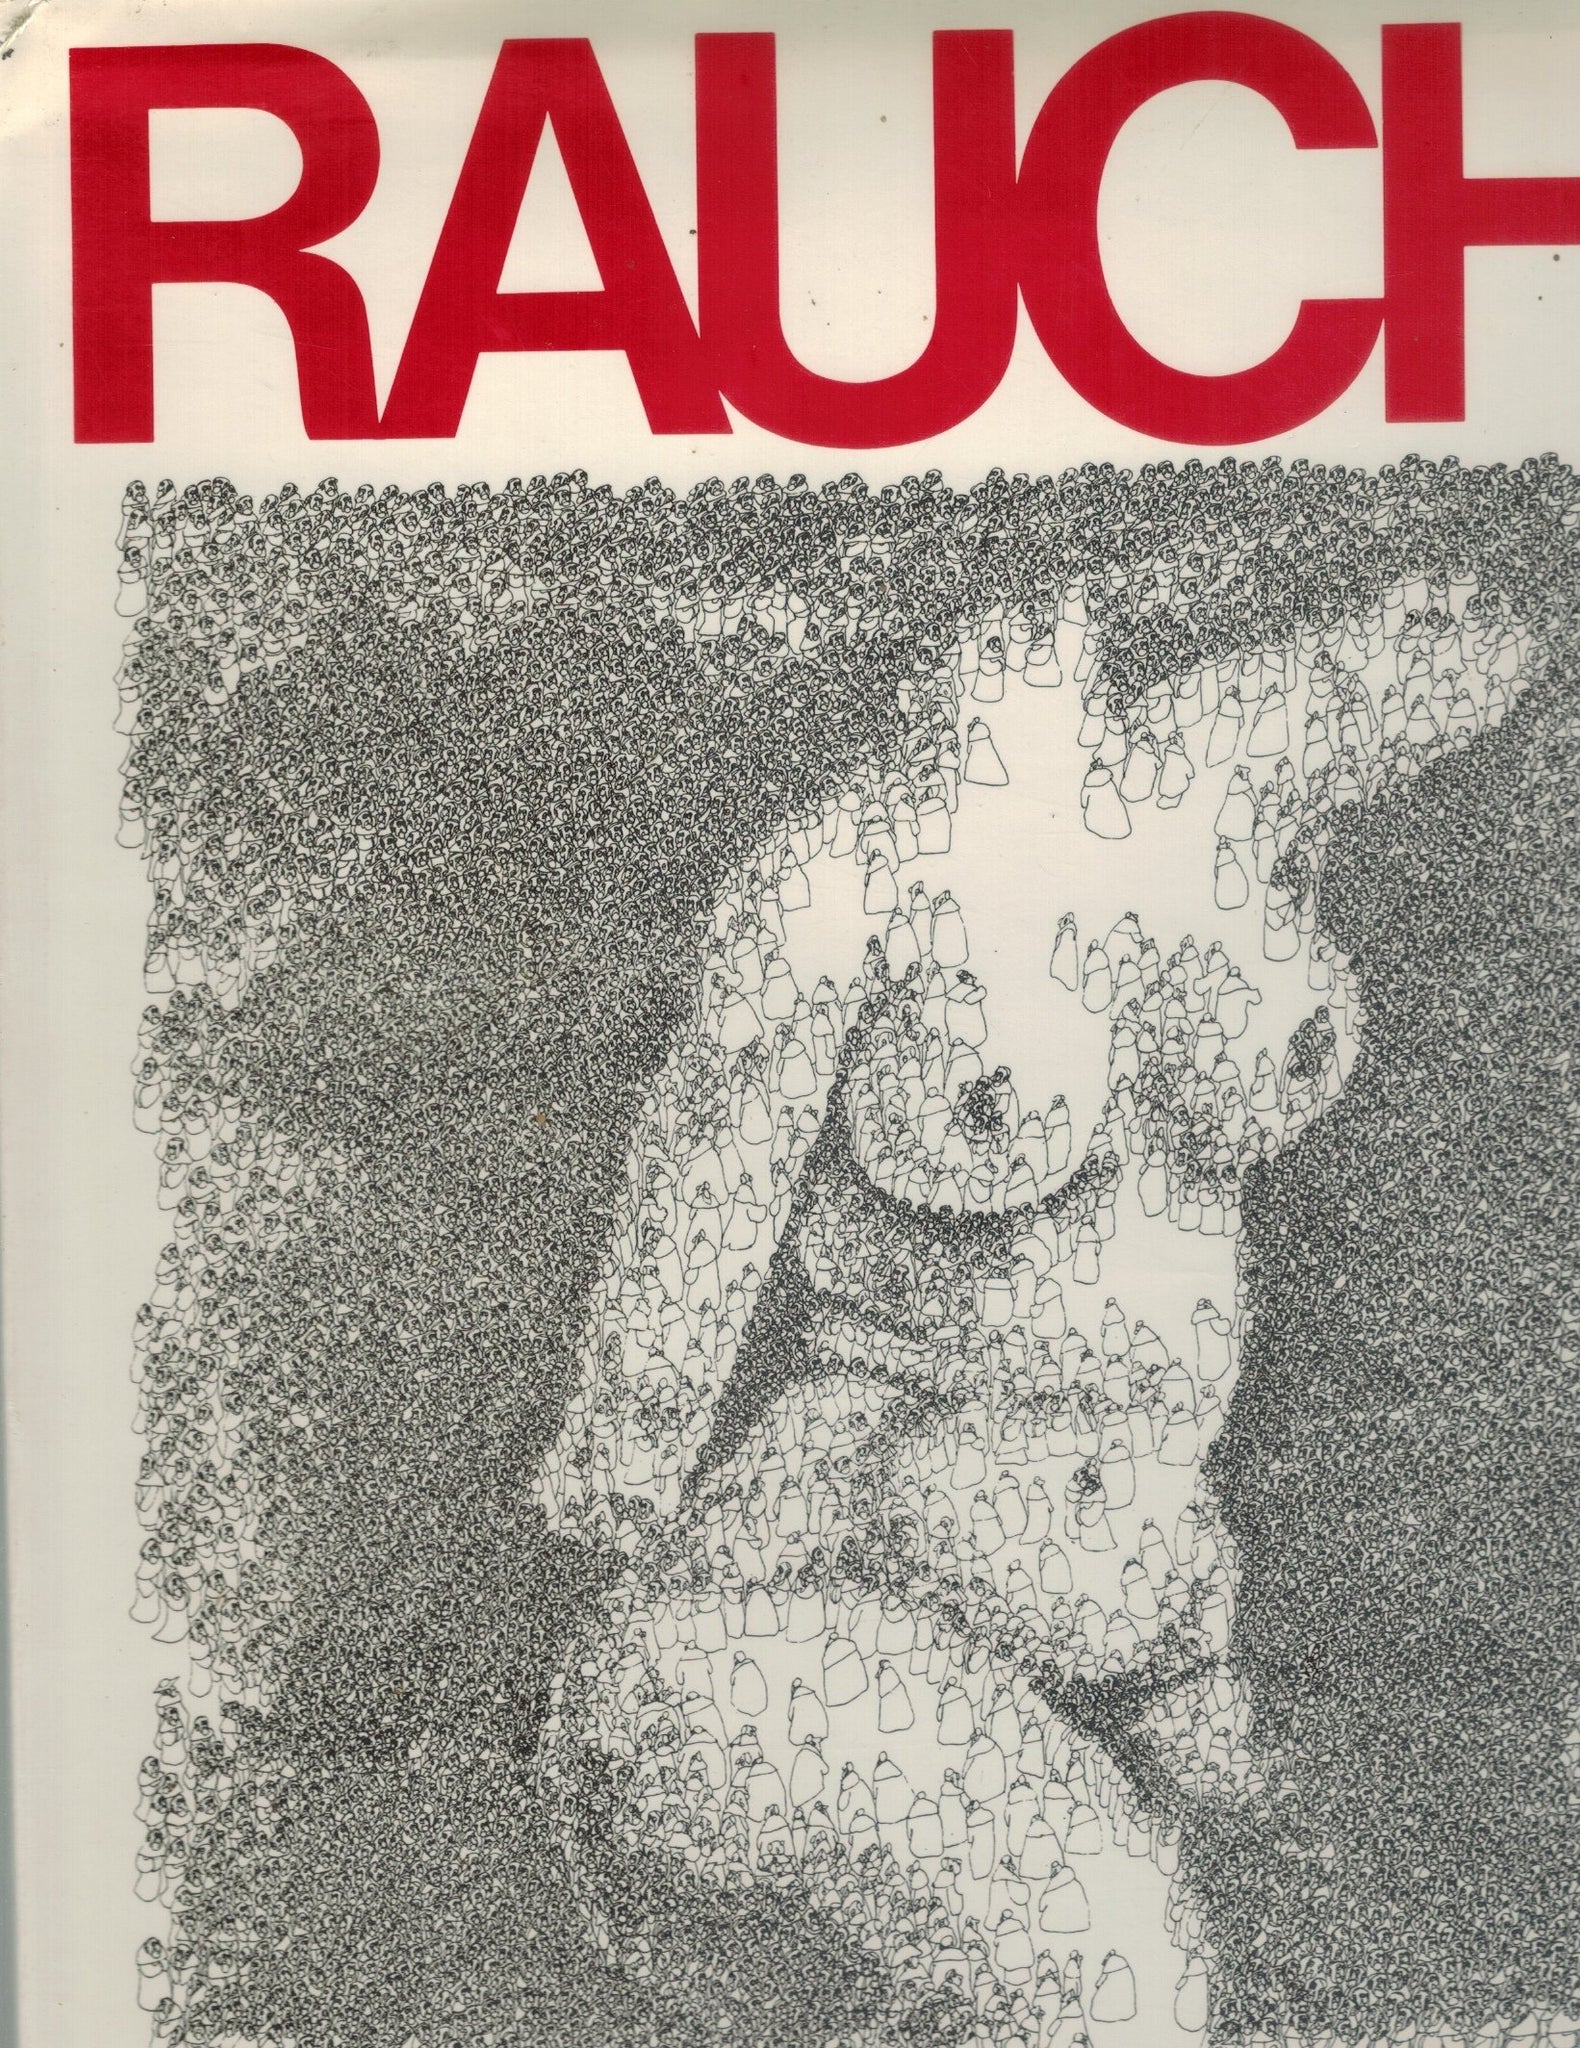 EN MASSE  by Rauch, Hans-Georg